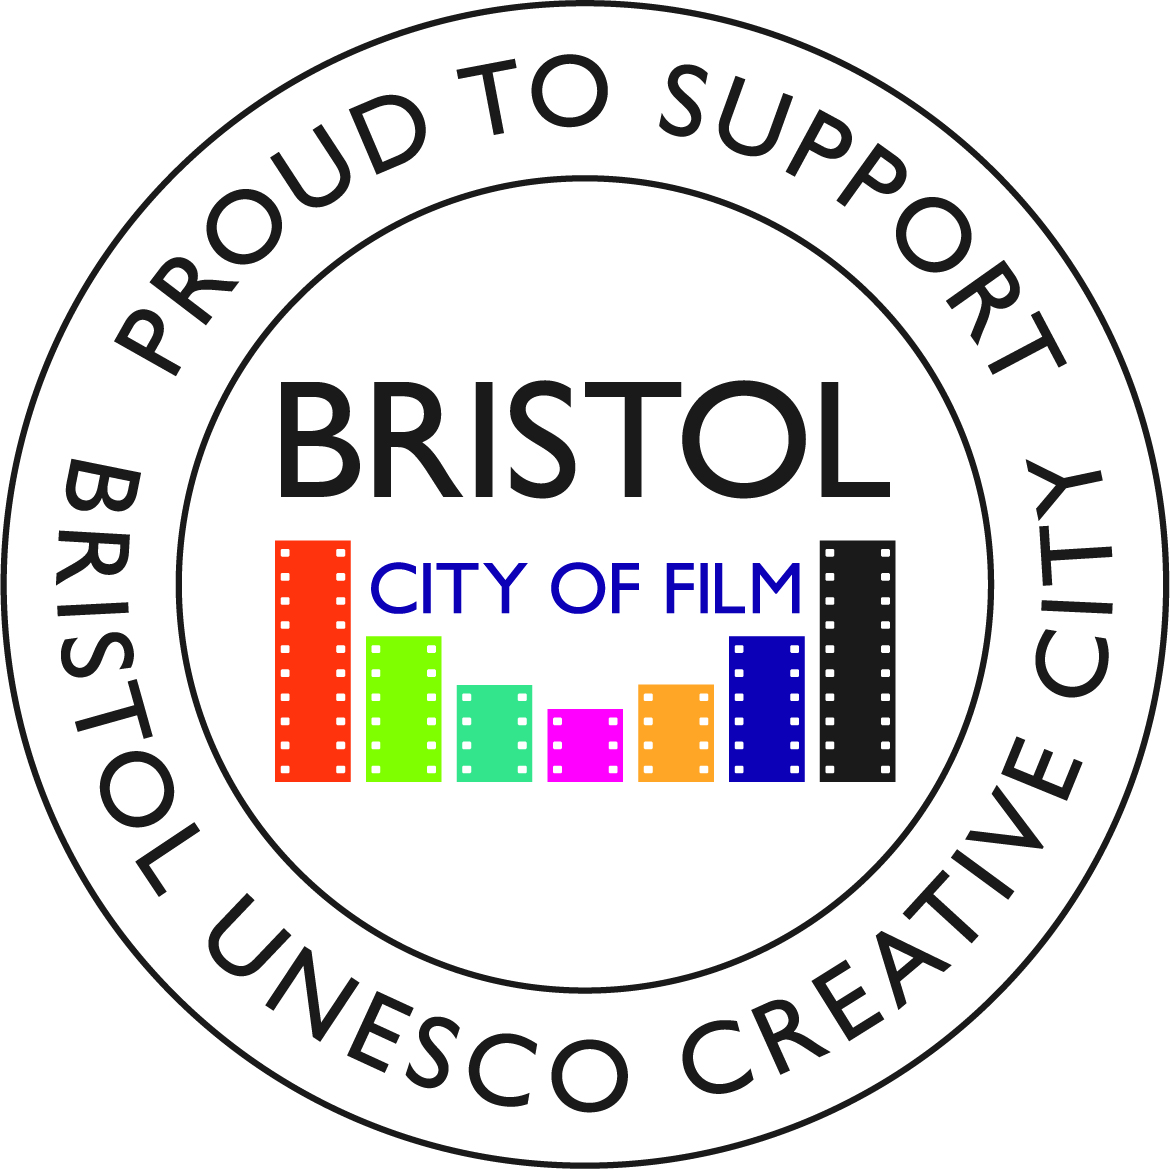 Bristol City of Film logo